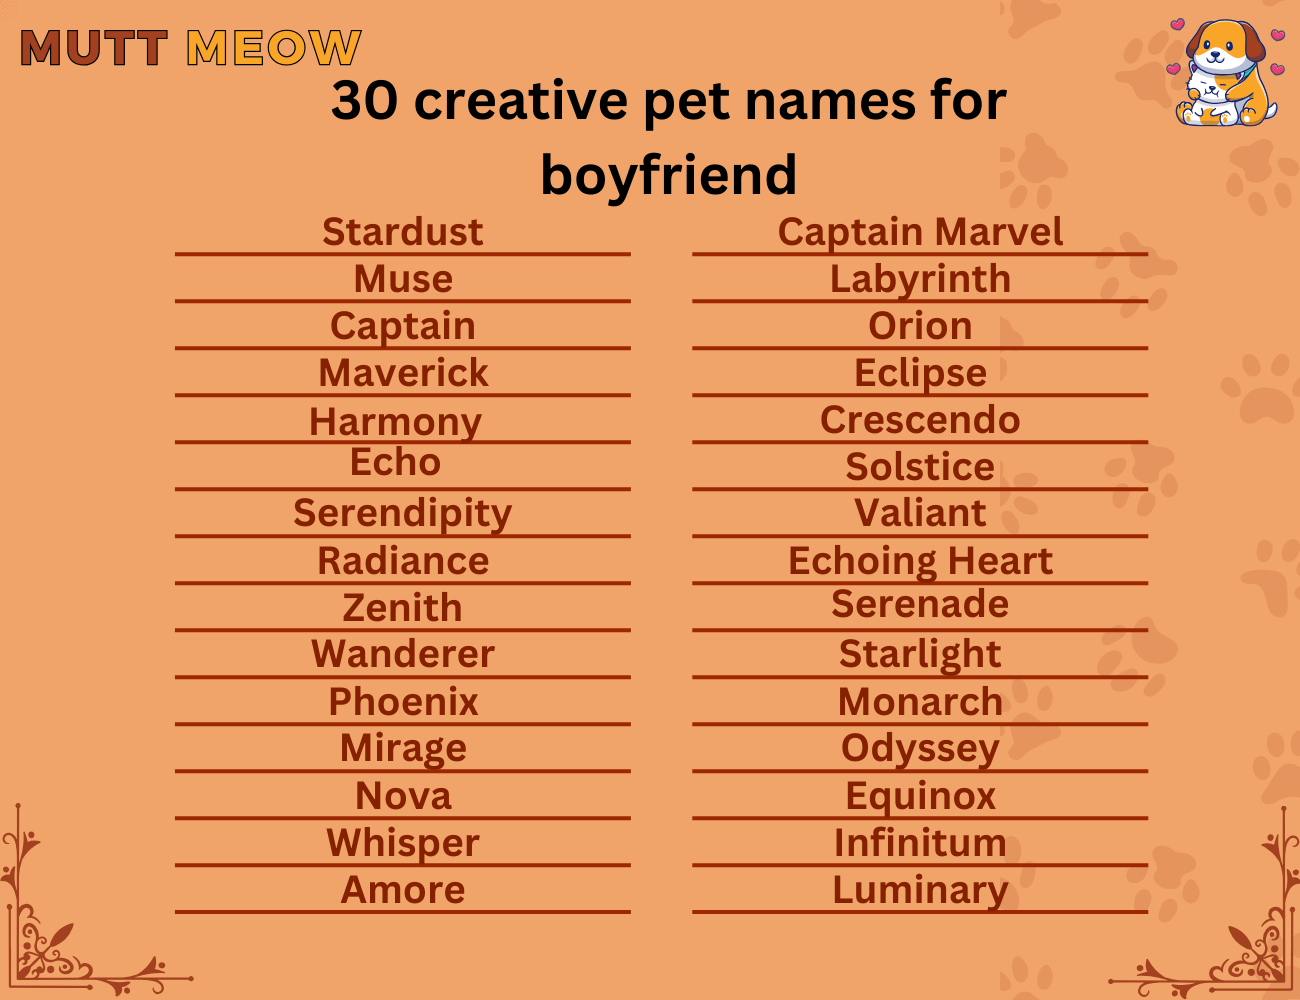 30 creative pet names for boyfriend